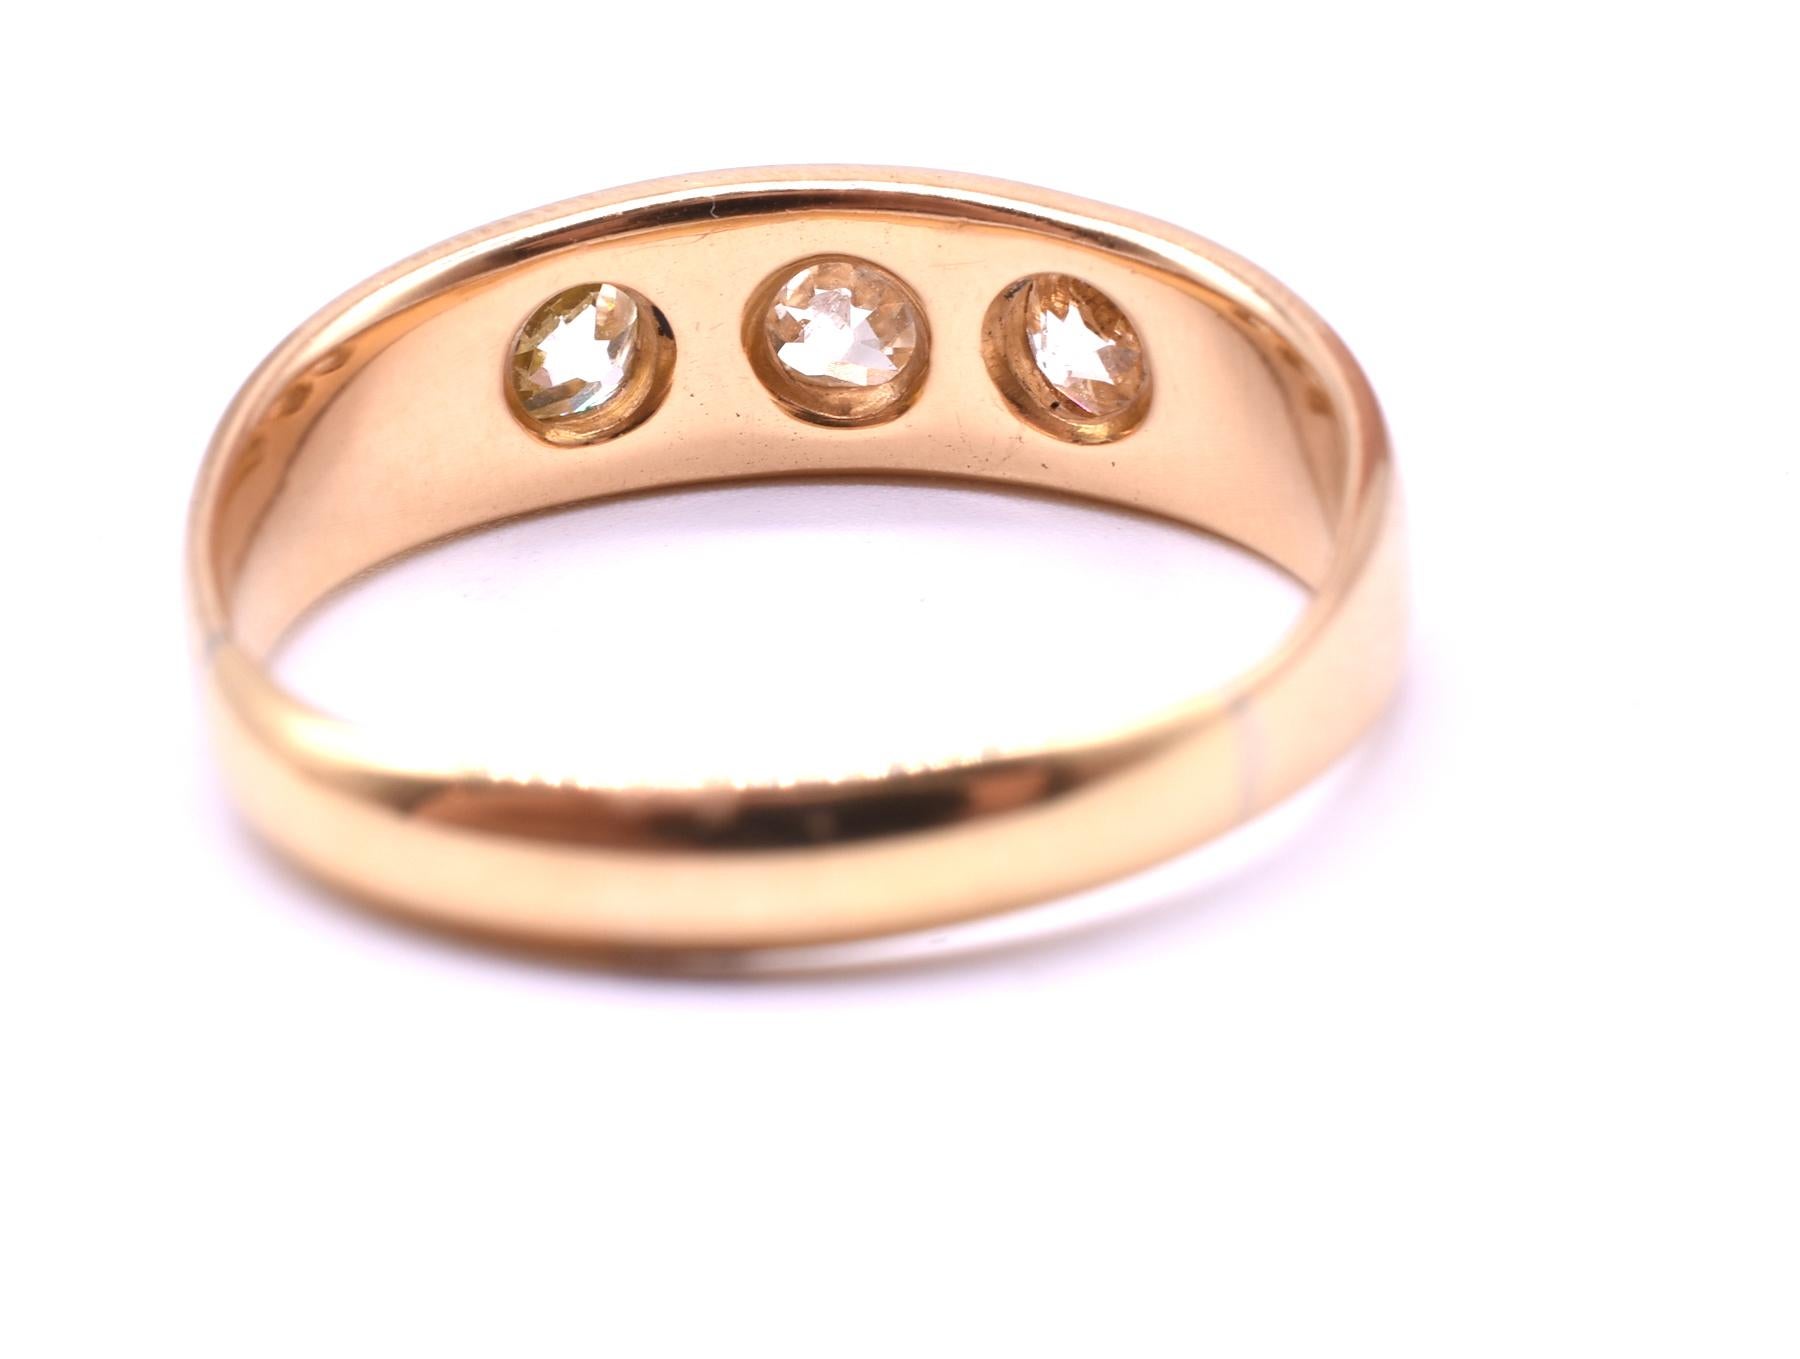 Edwardian Antique Gypsy Ring with Three Diamonds